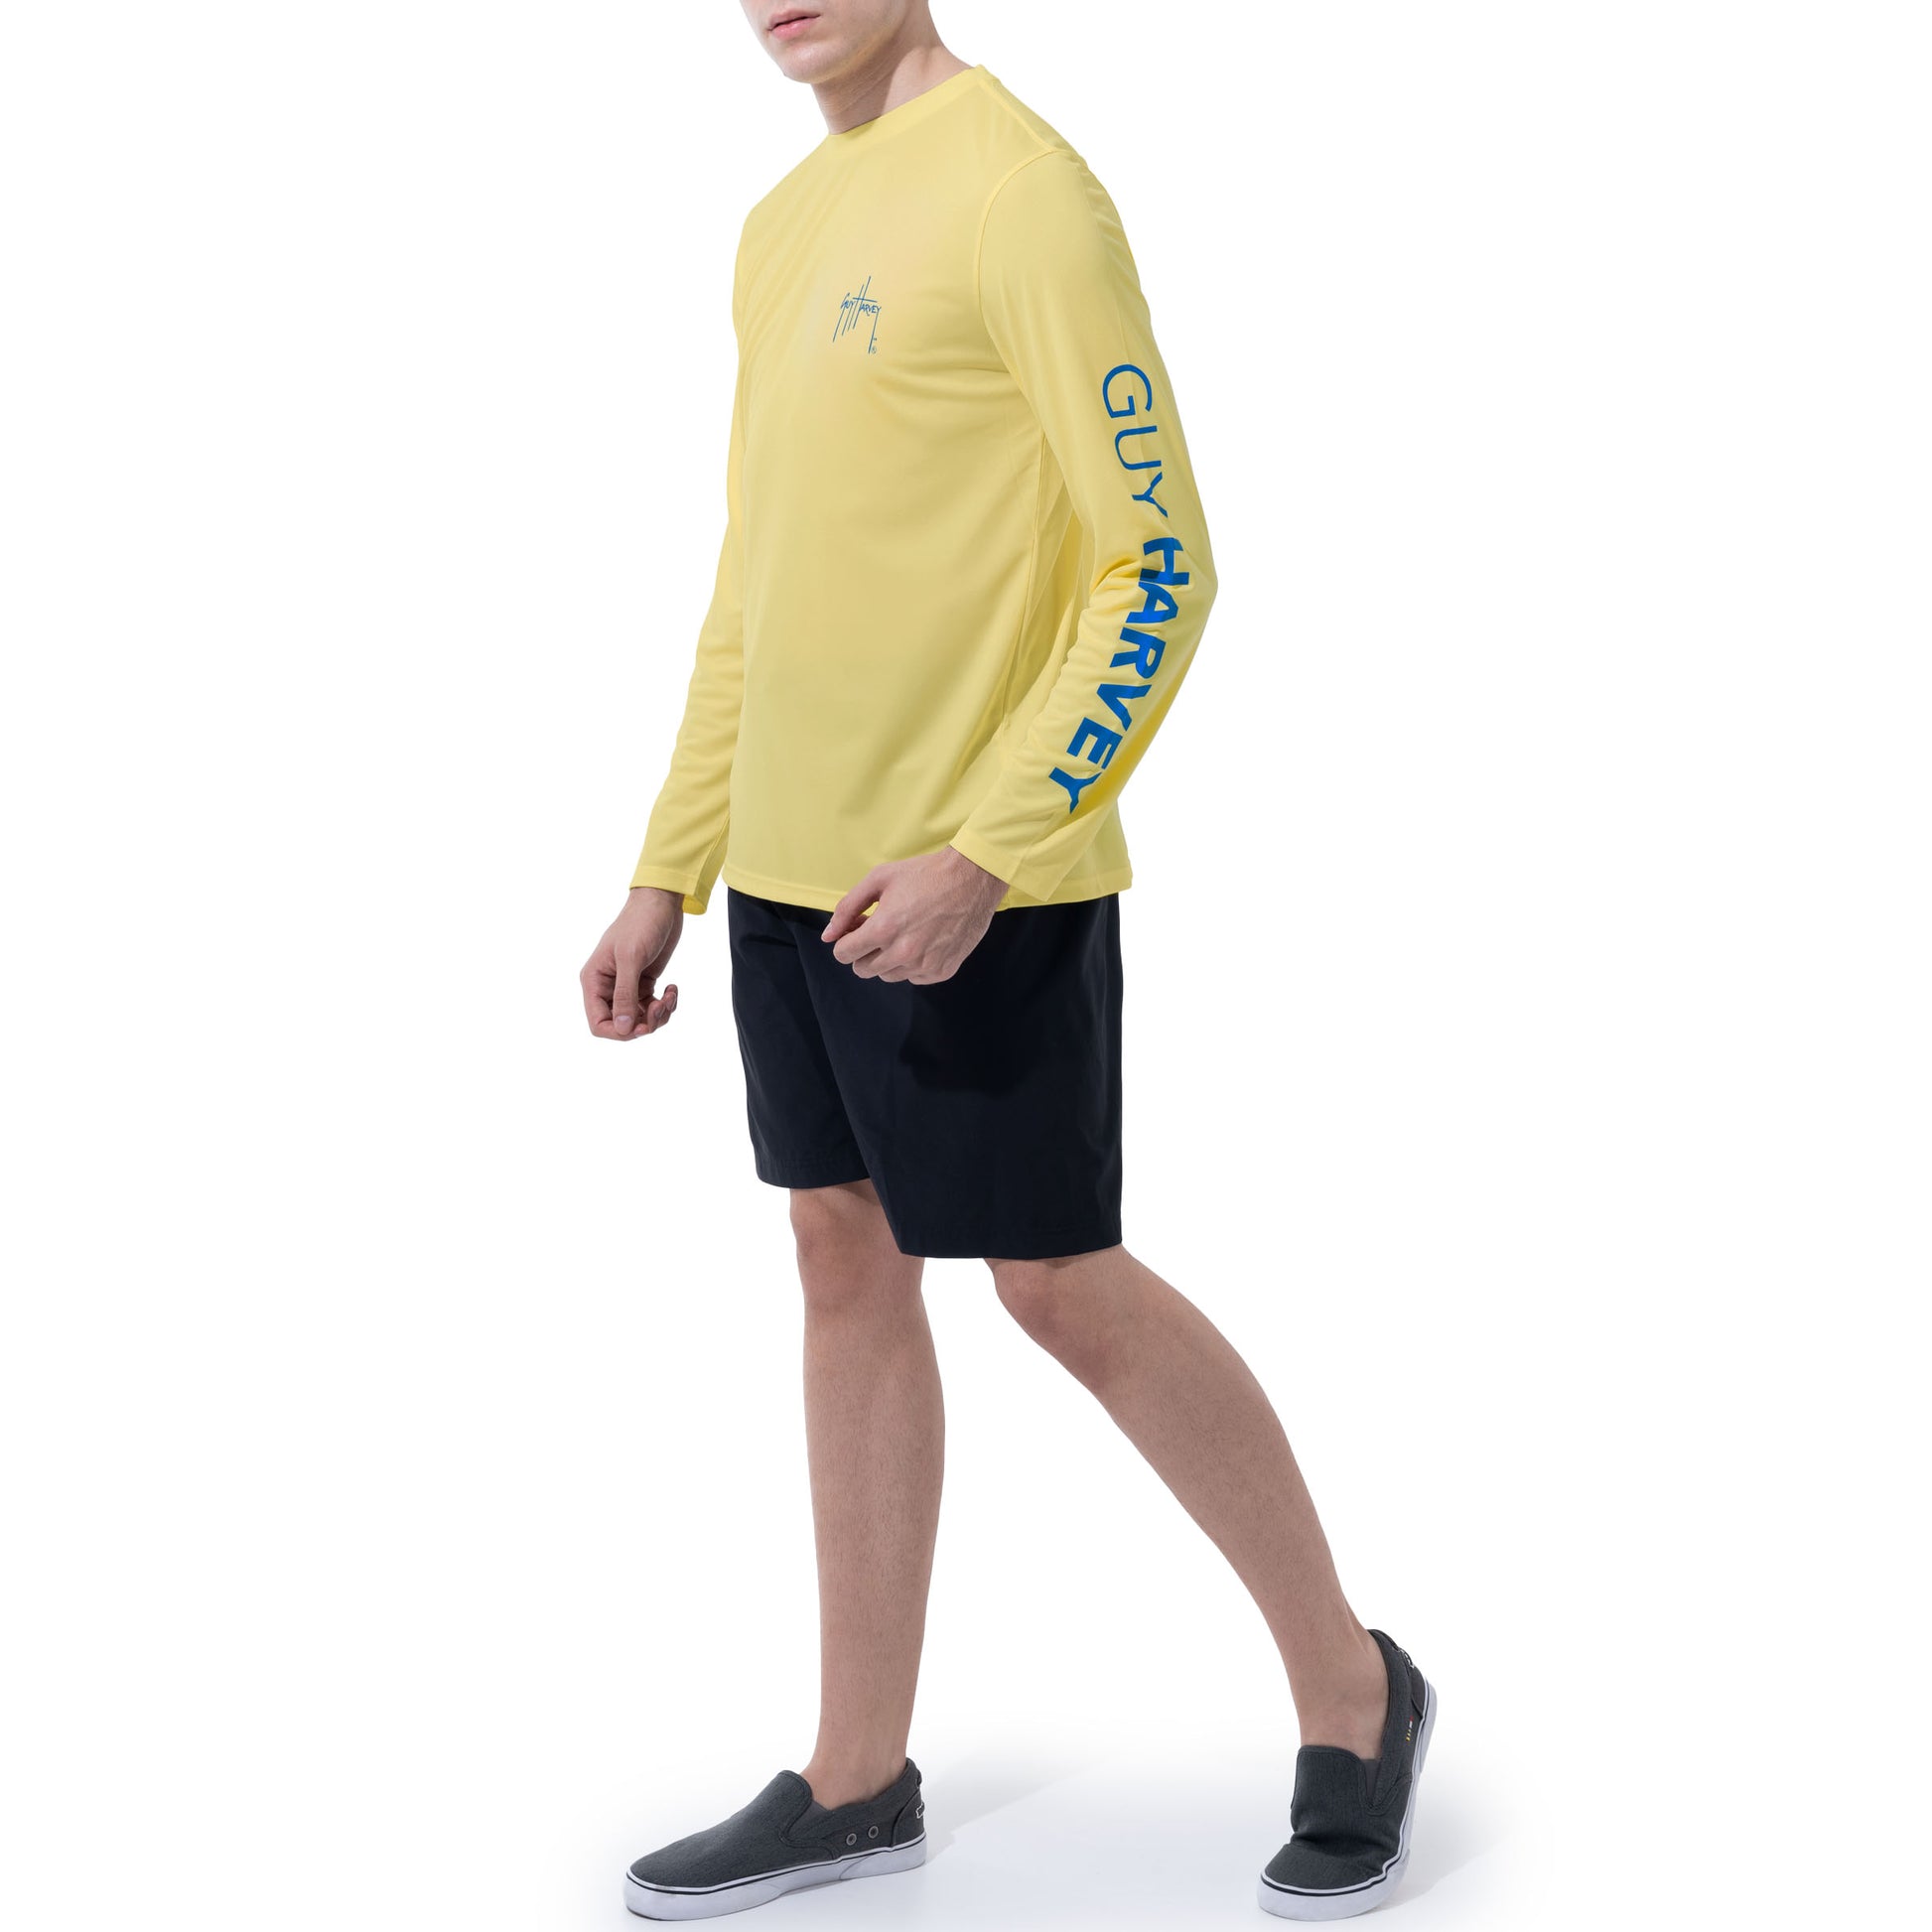 inhzoy Men's Quick-Dry UPF 50+ UV Sun Protection Long Sleeve Rash Guard  Compression Shirts Top Type A L 